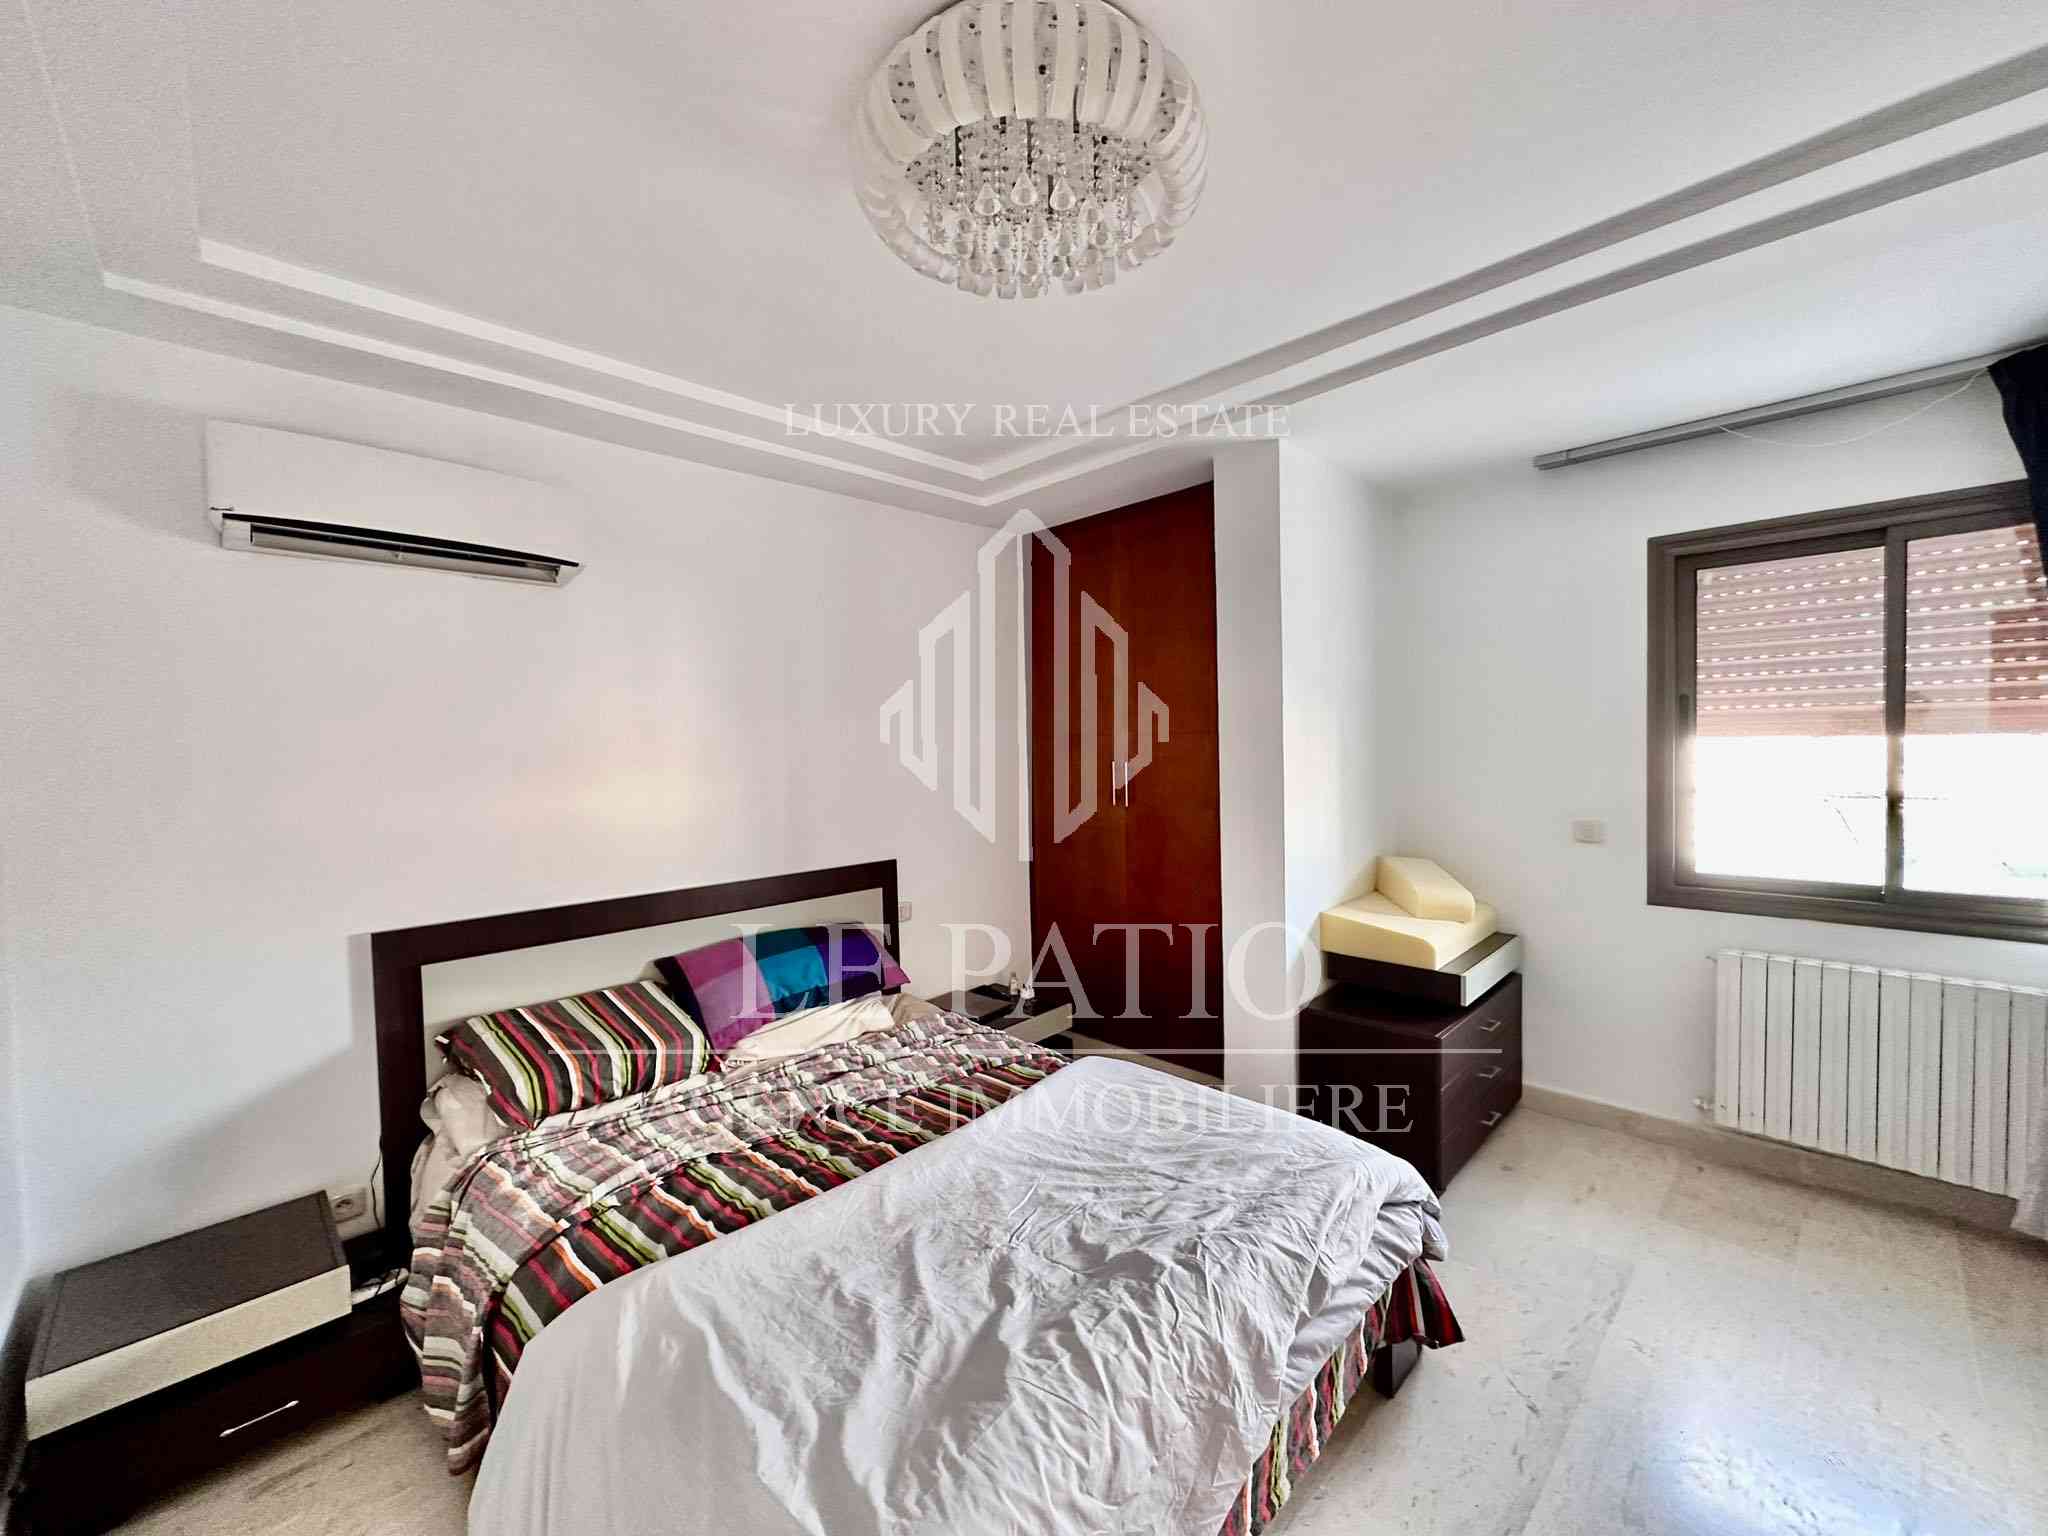 La Marsa Sidi Daoud Location Appart. 2 pices Appartement s1 meuble a la marsa avec terrasse